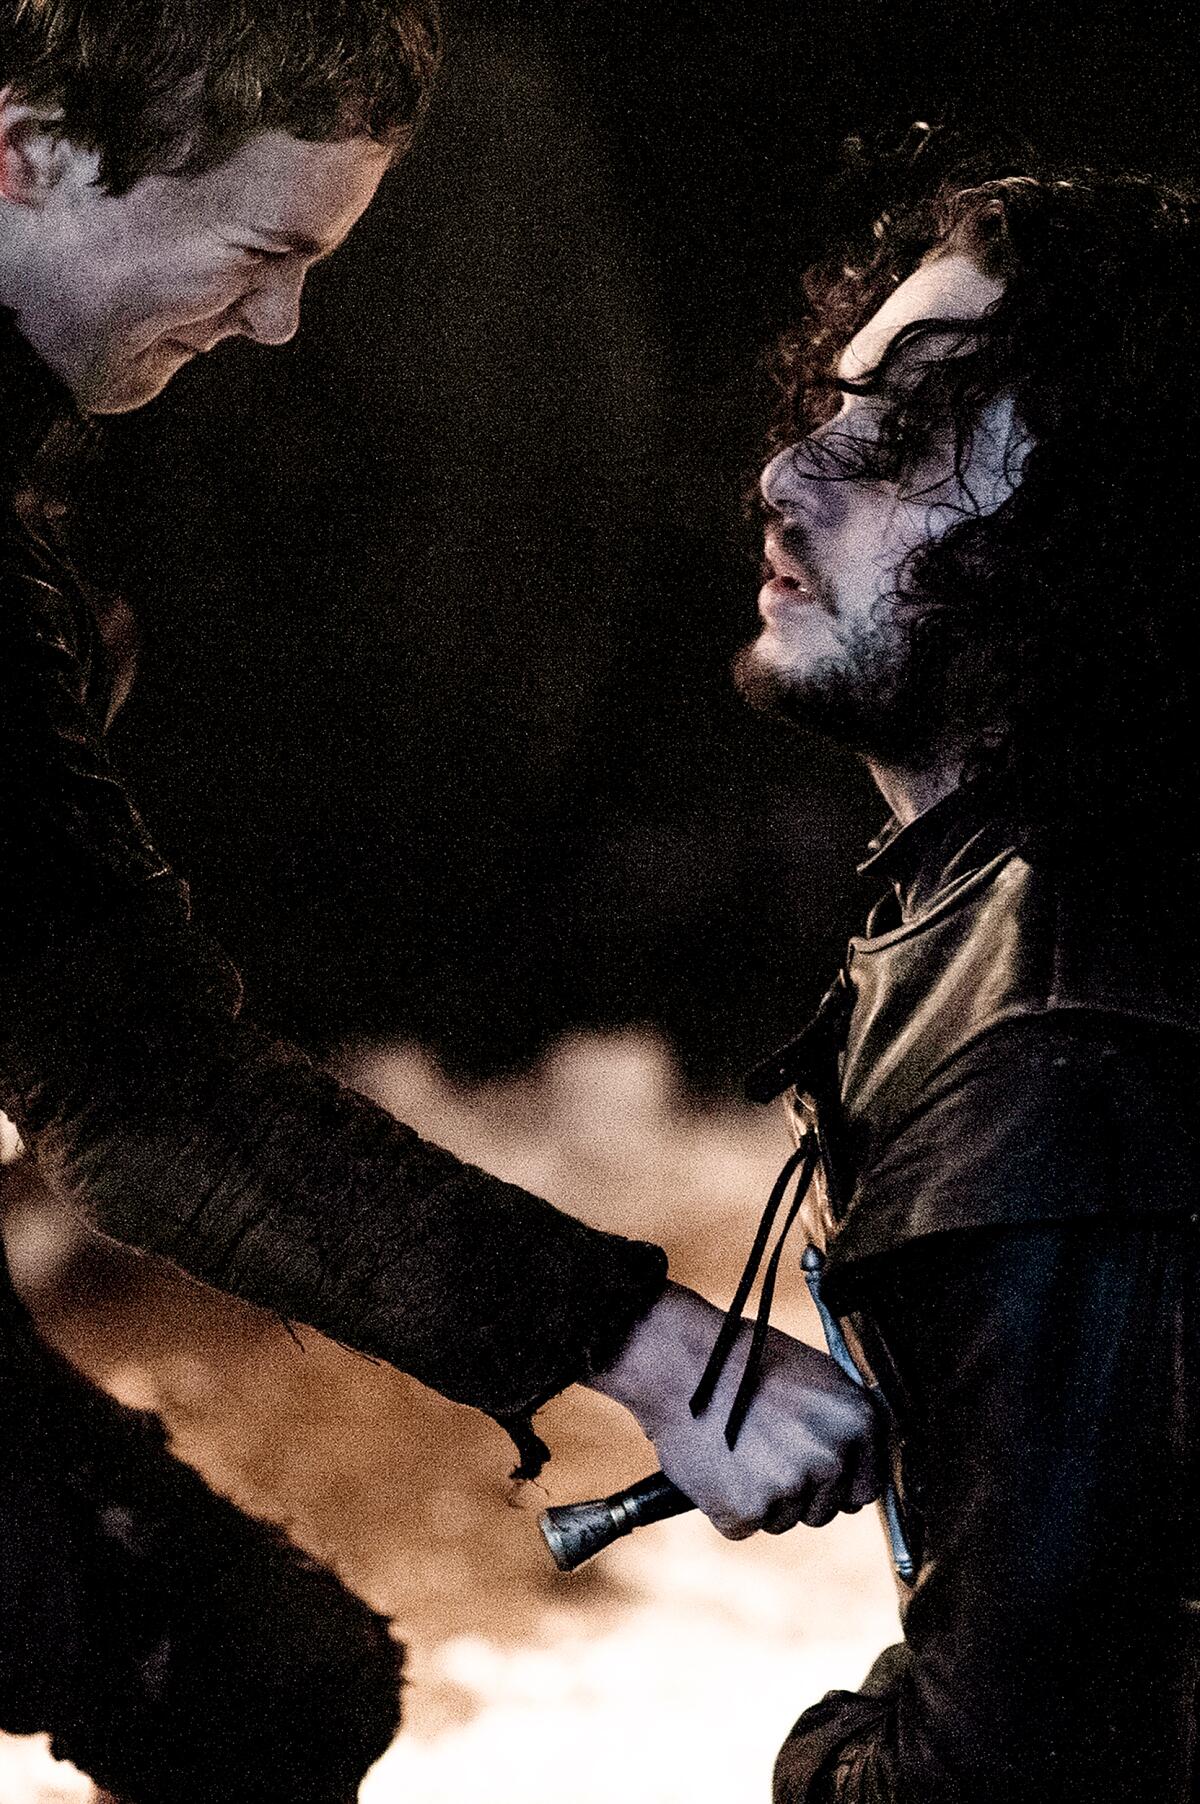 Brenock O'Connor's Olly stabs Kit Harington's Jon Snow in "Game of Thrones."